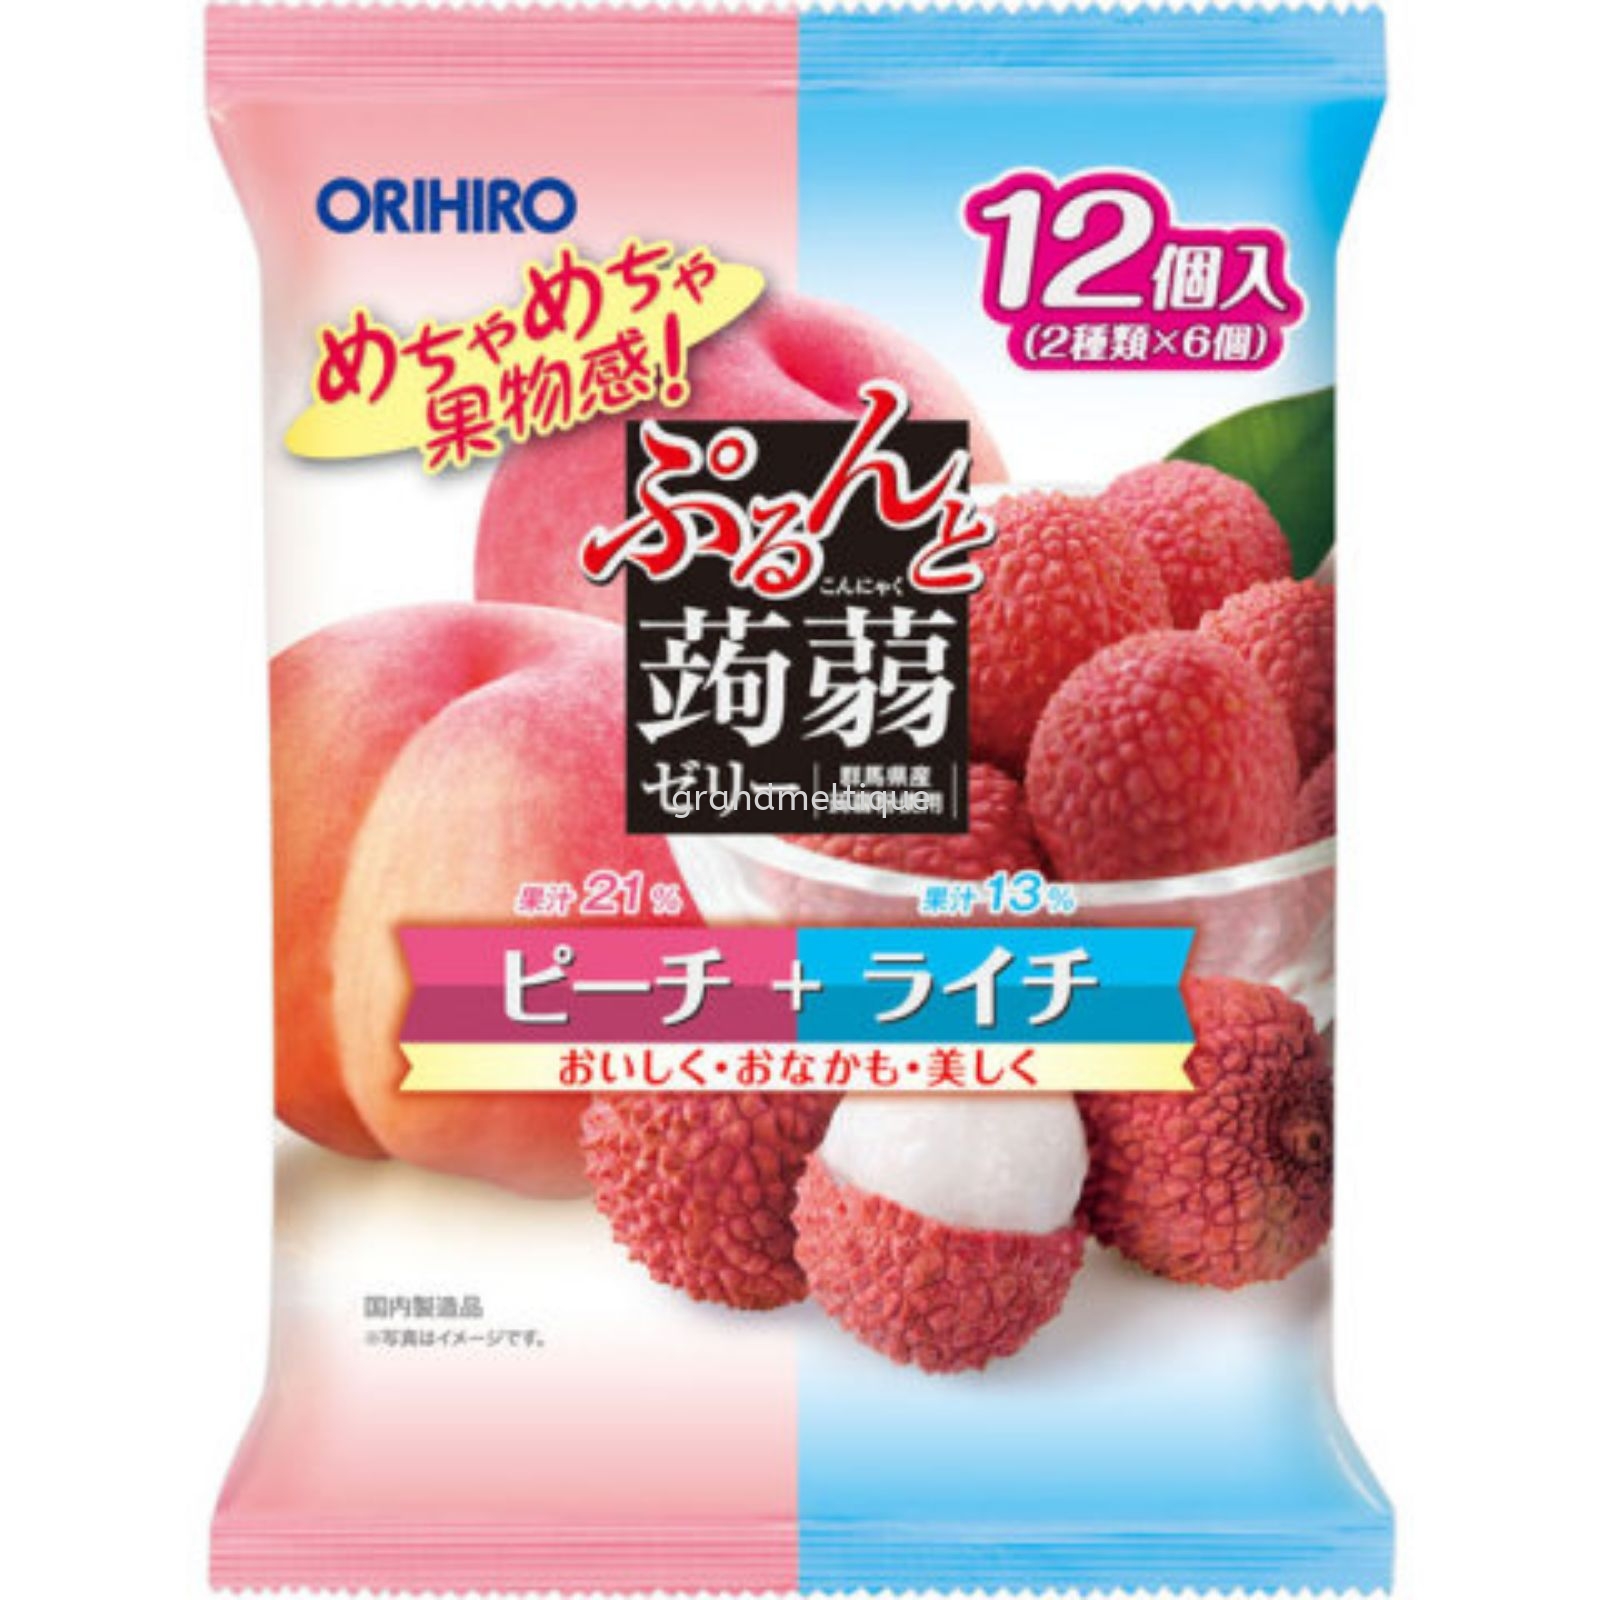 ORIHIRO KONJAC PEACH+PINK GRAPEFRUIT 欧立喜乐-白桃+葡萄柚 12EA 240G ...